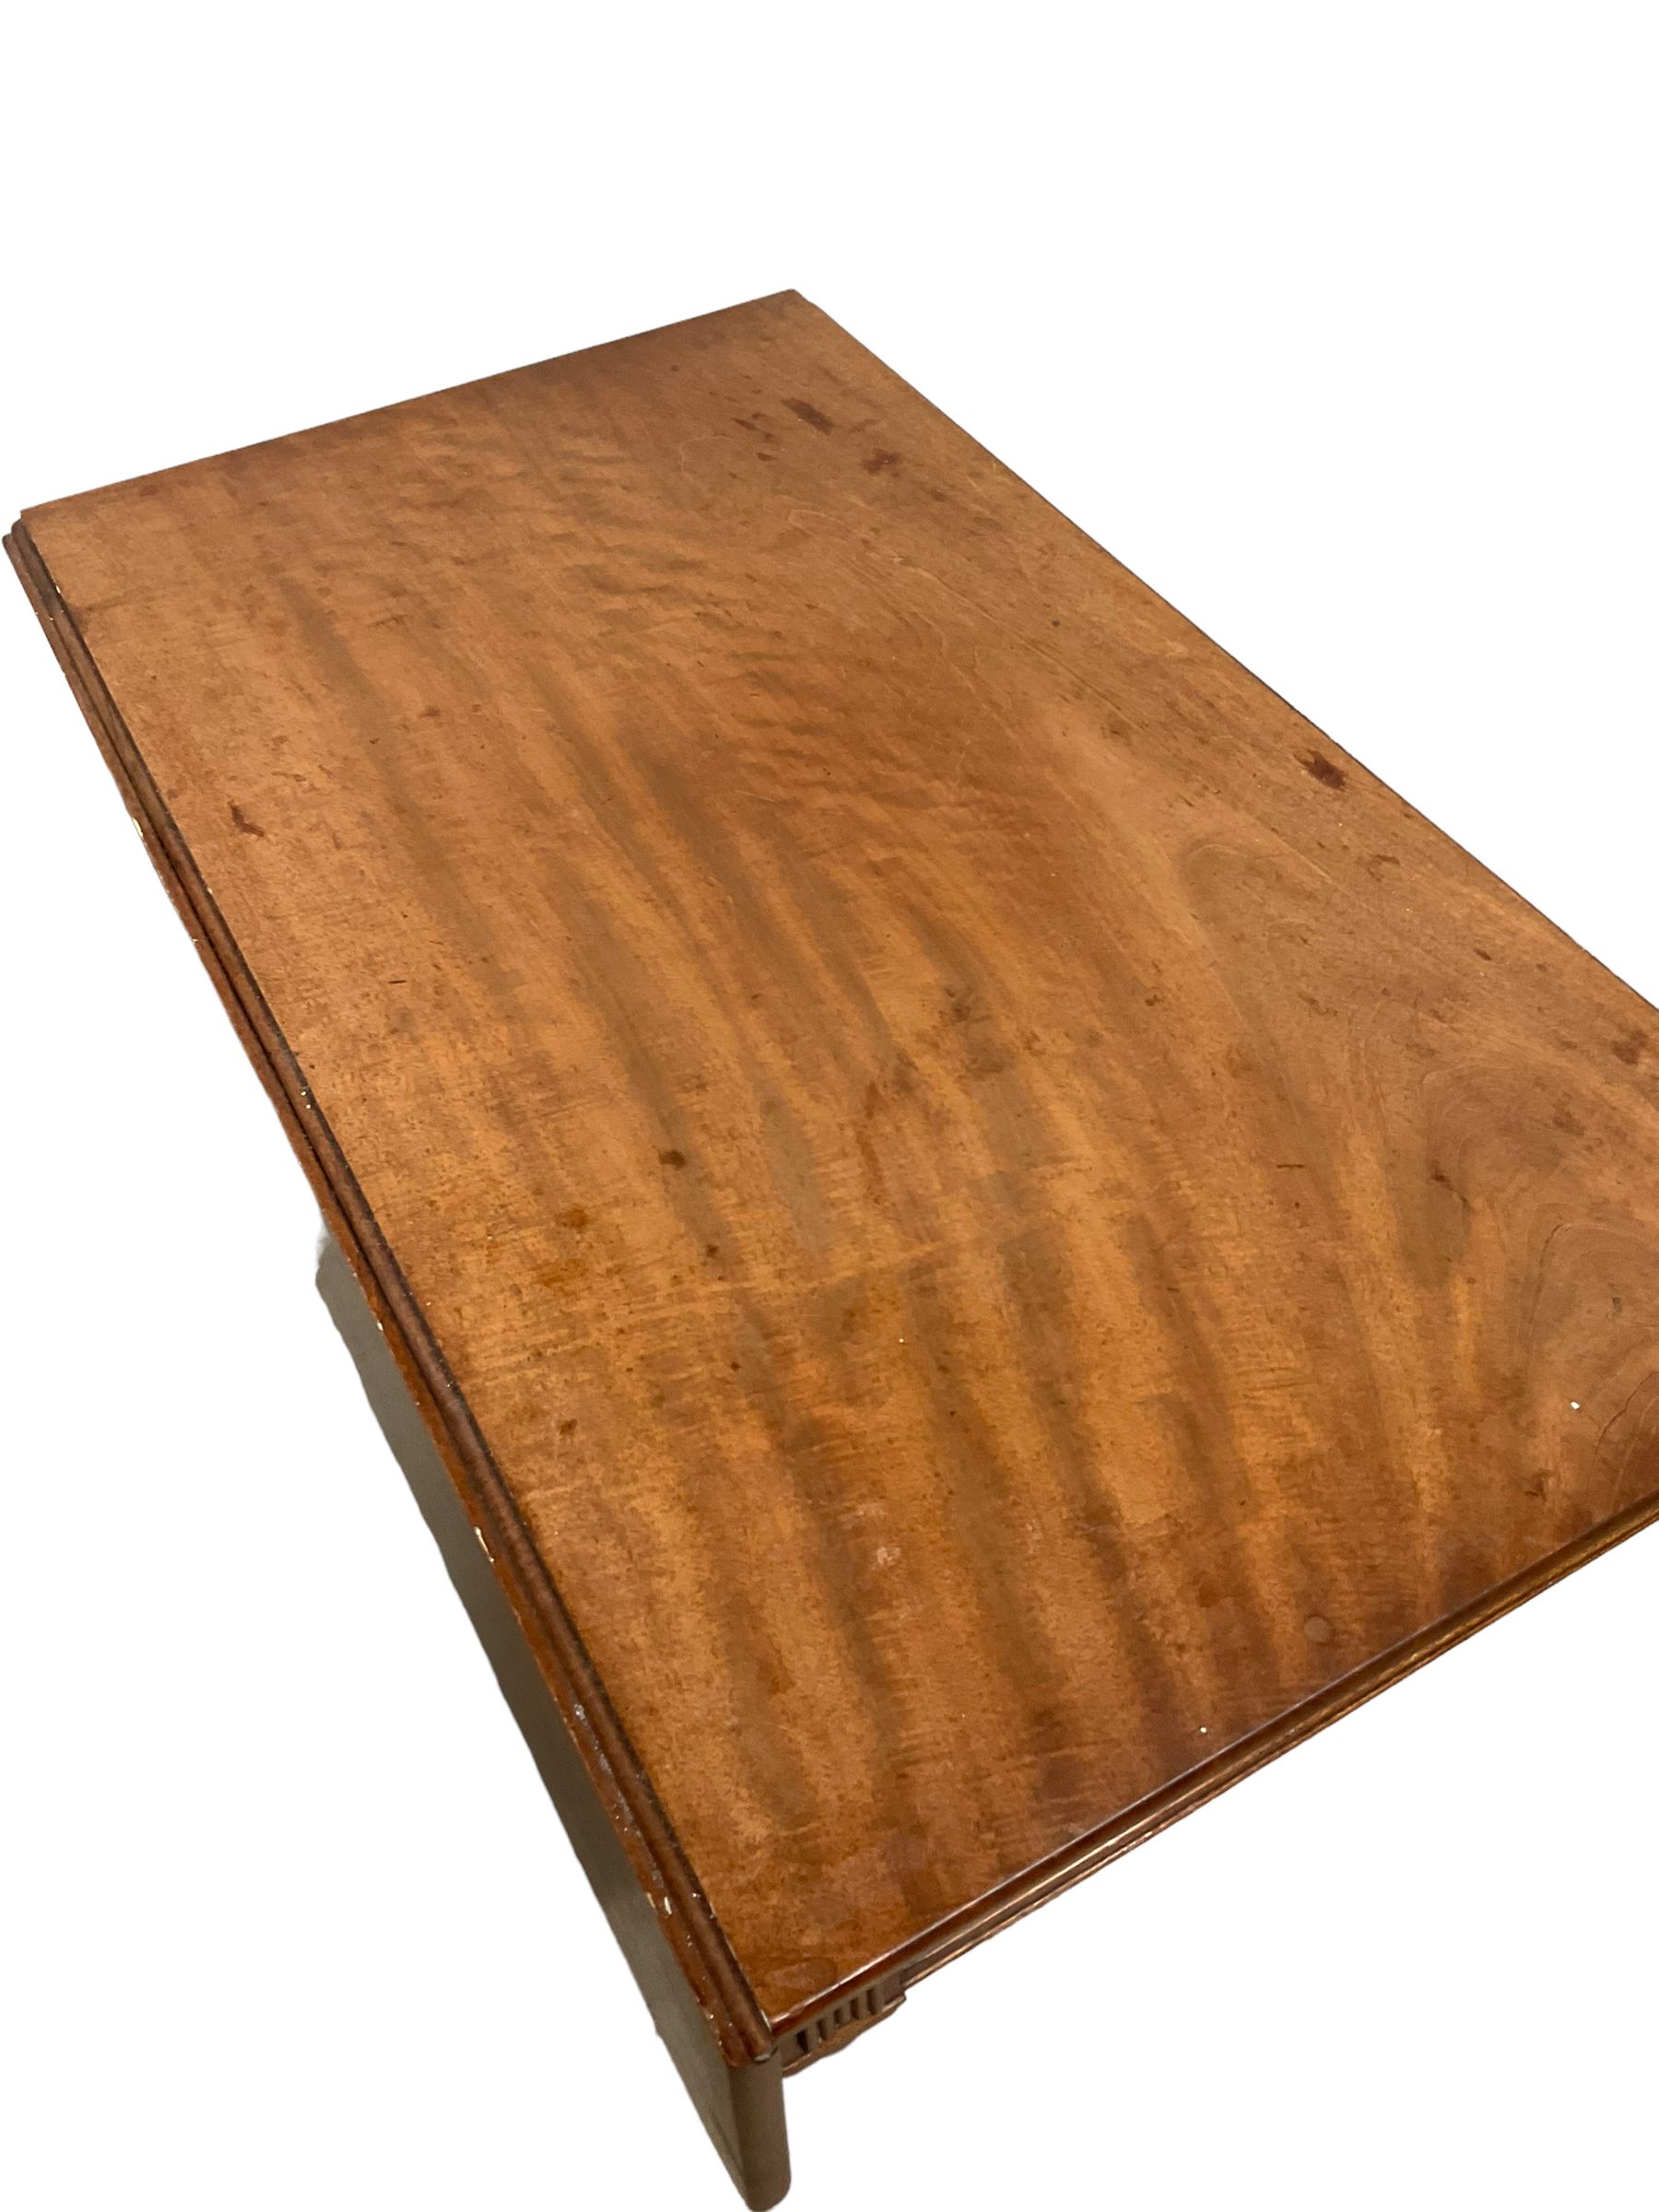 19th century mahogany drop leaf table - Image 3 of 3